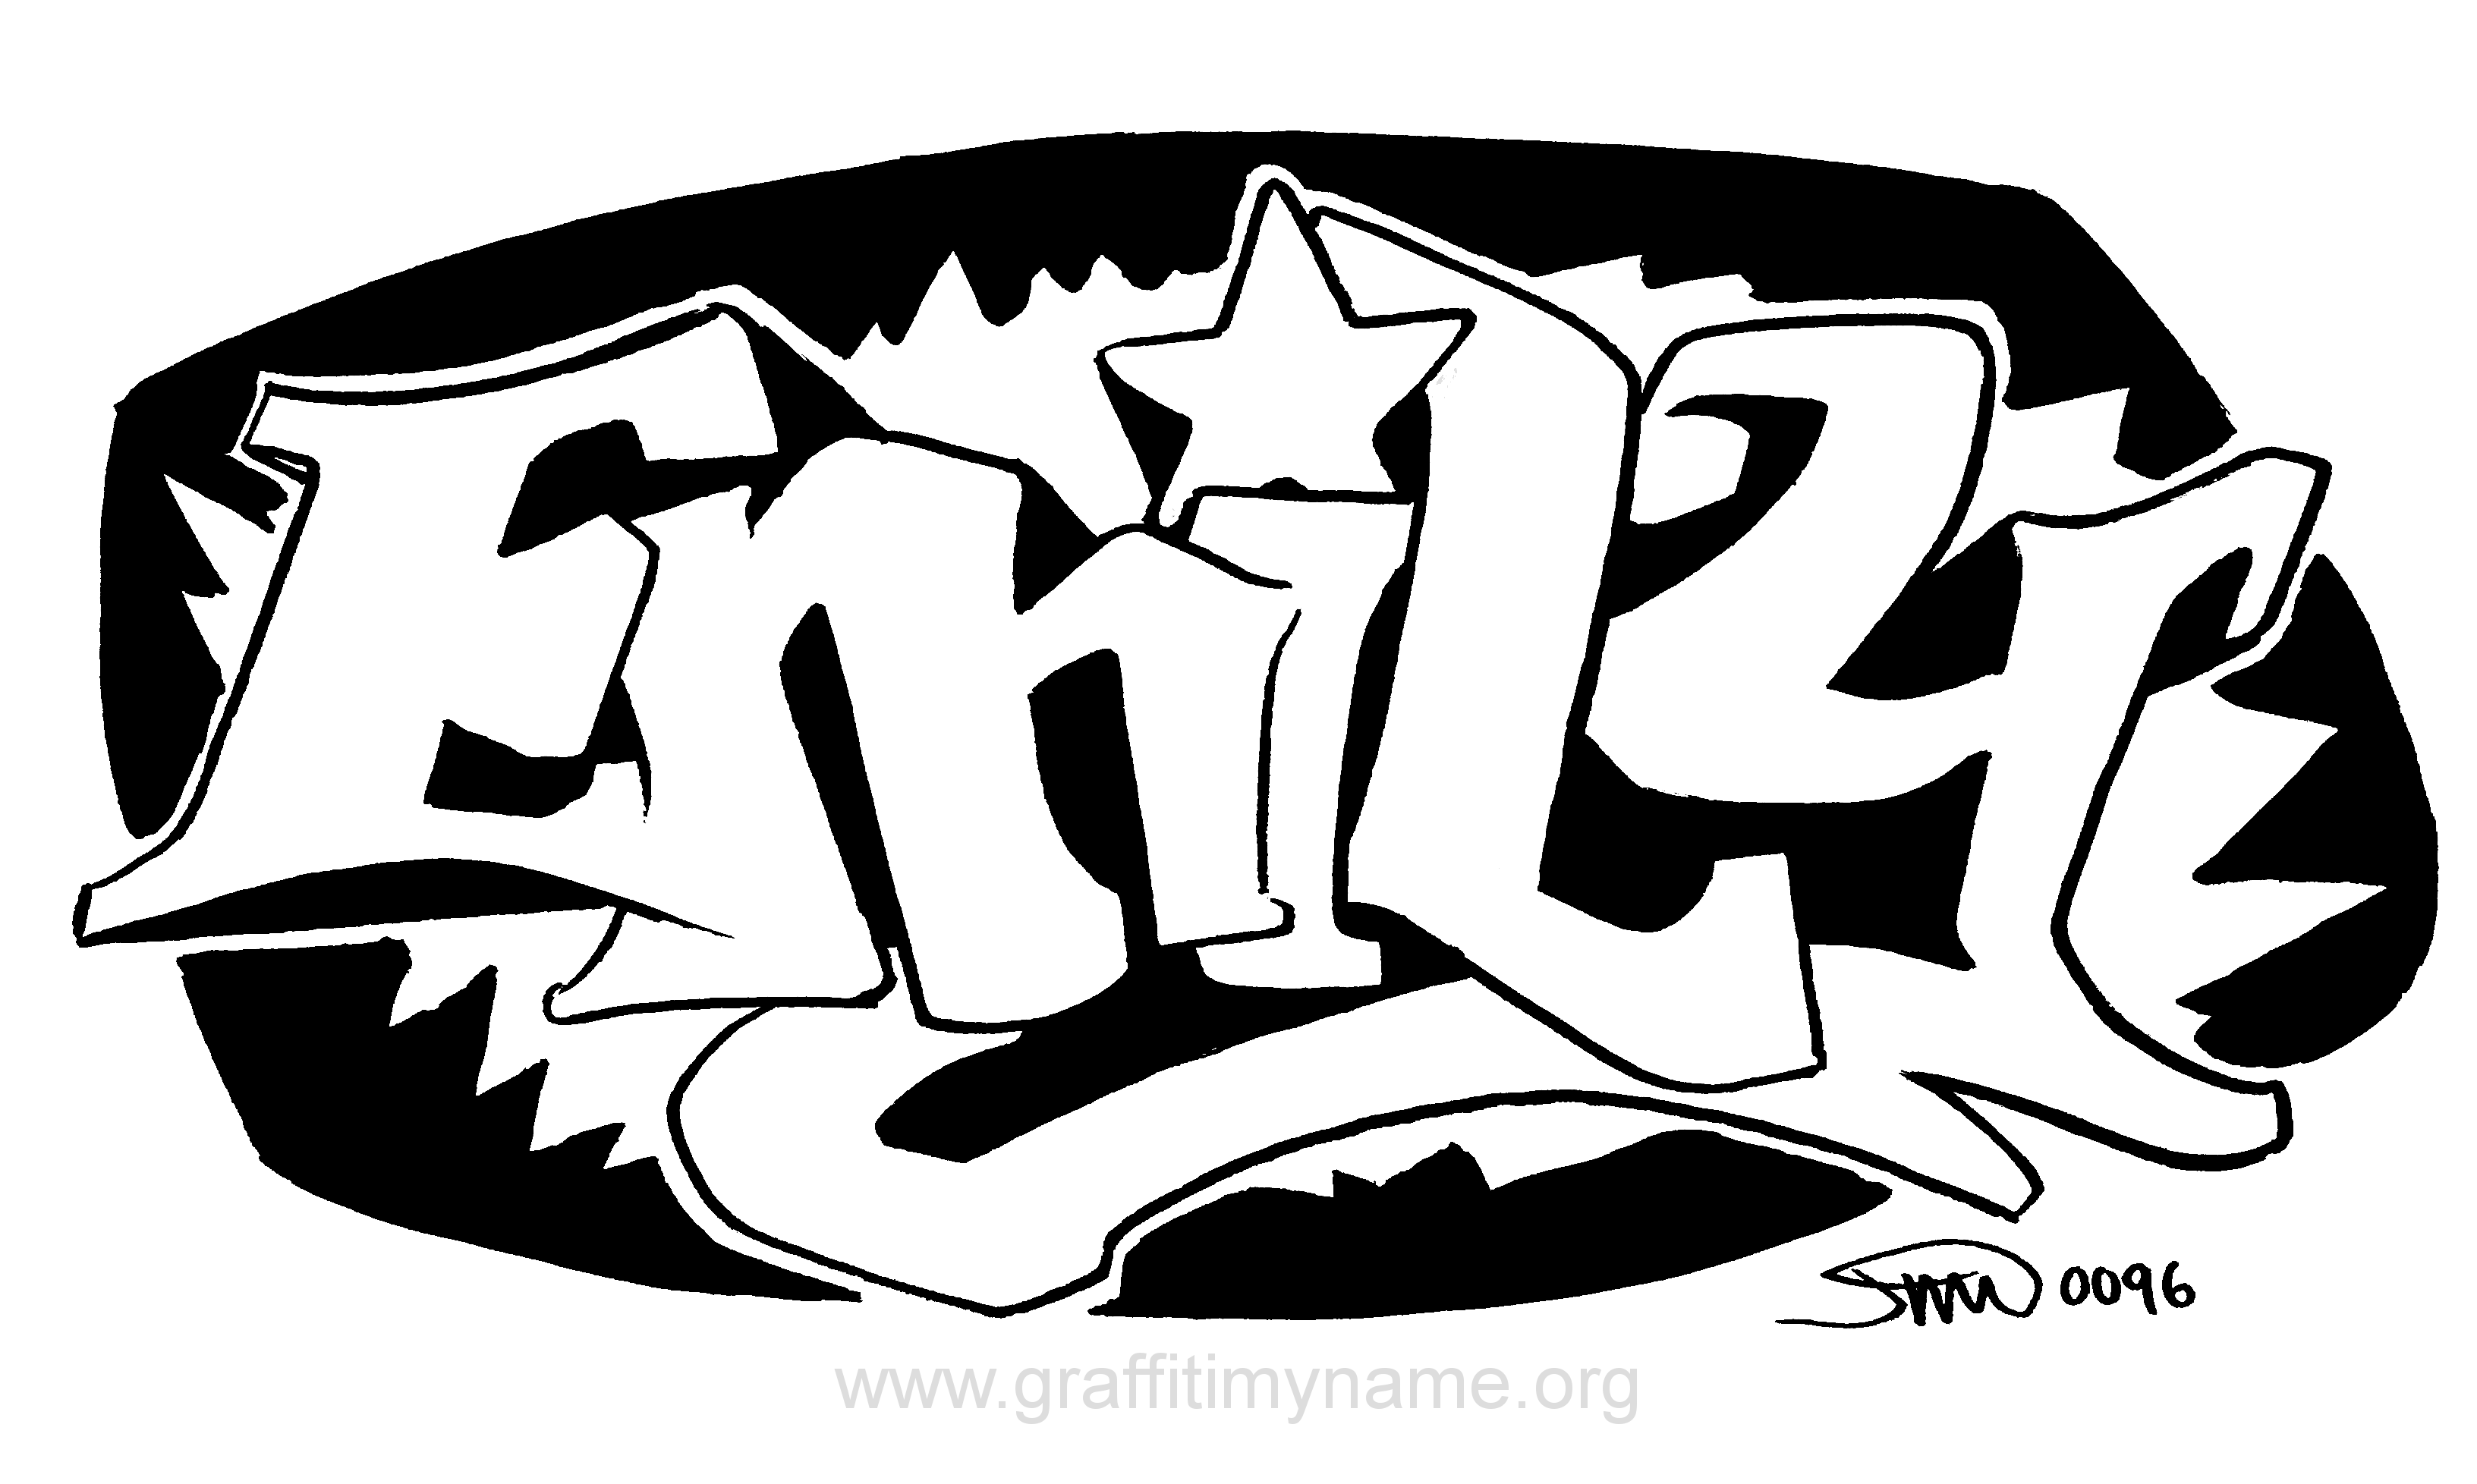 Emily Graffiti name coloring page 